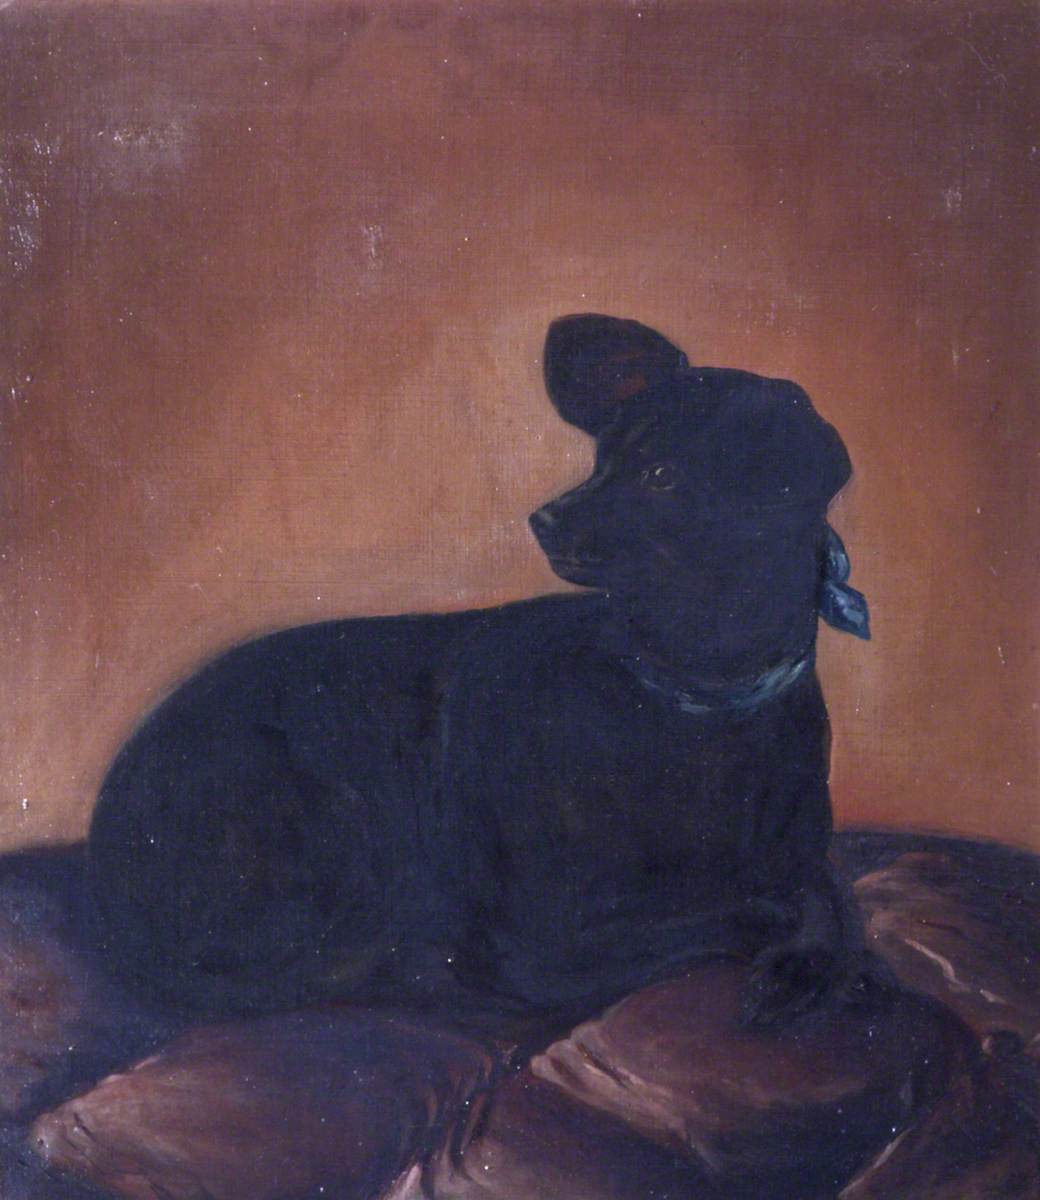 A Black Dog